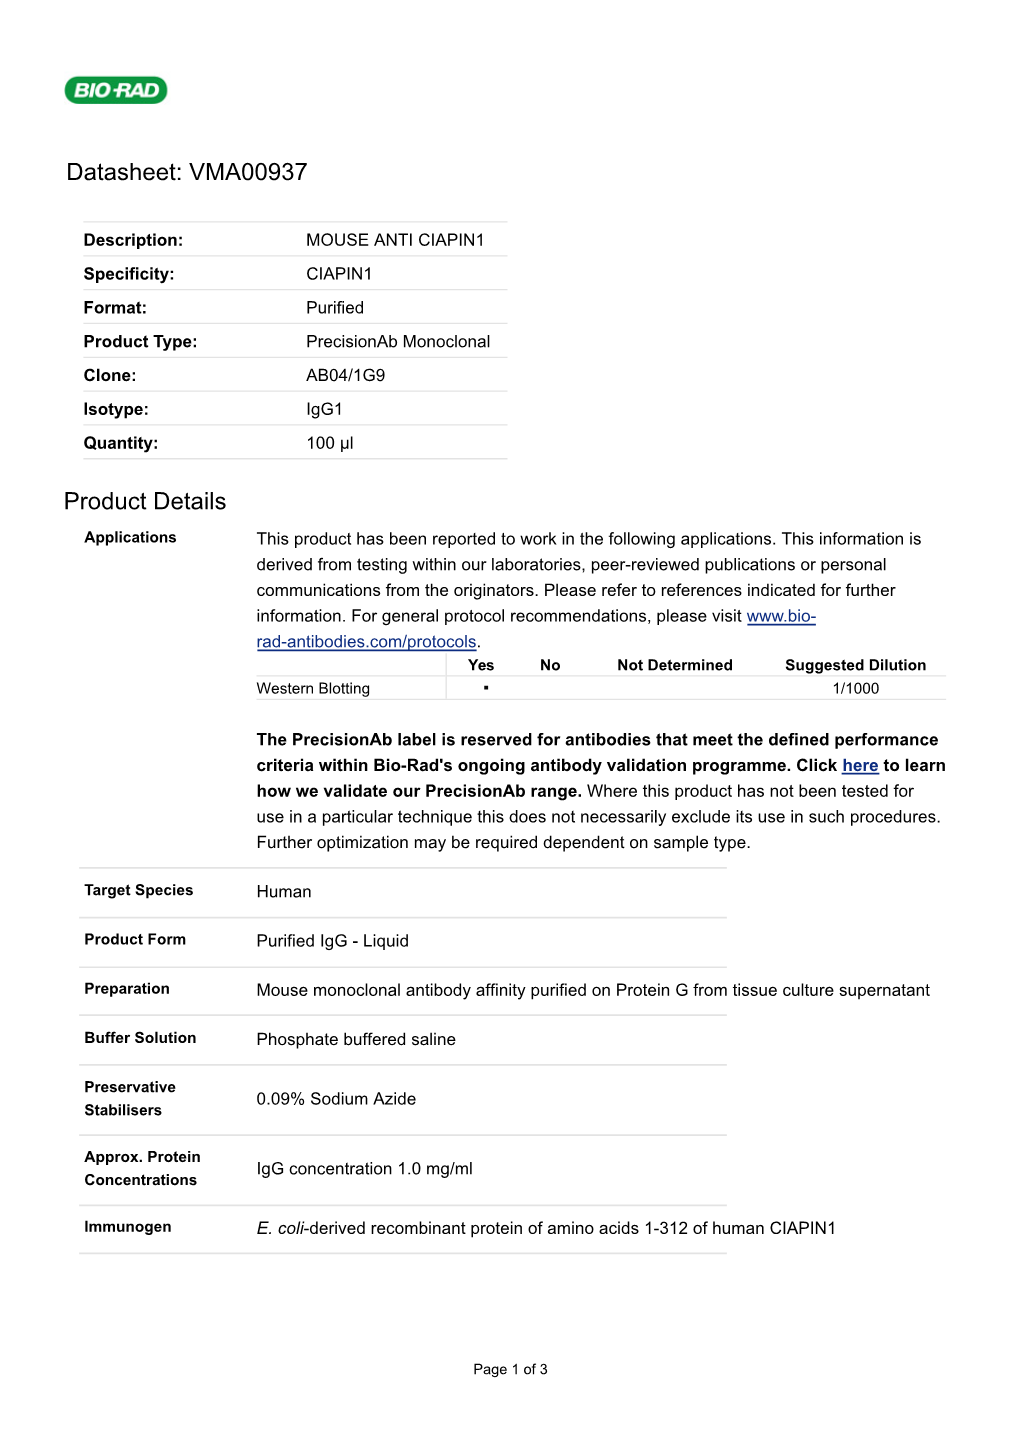 Datasheet: VMA00937 Product Details